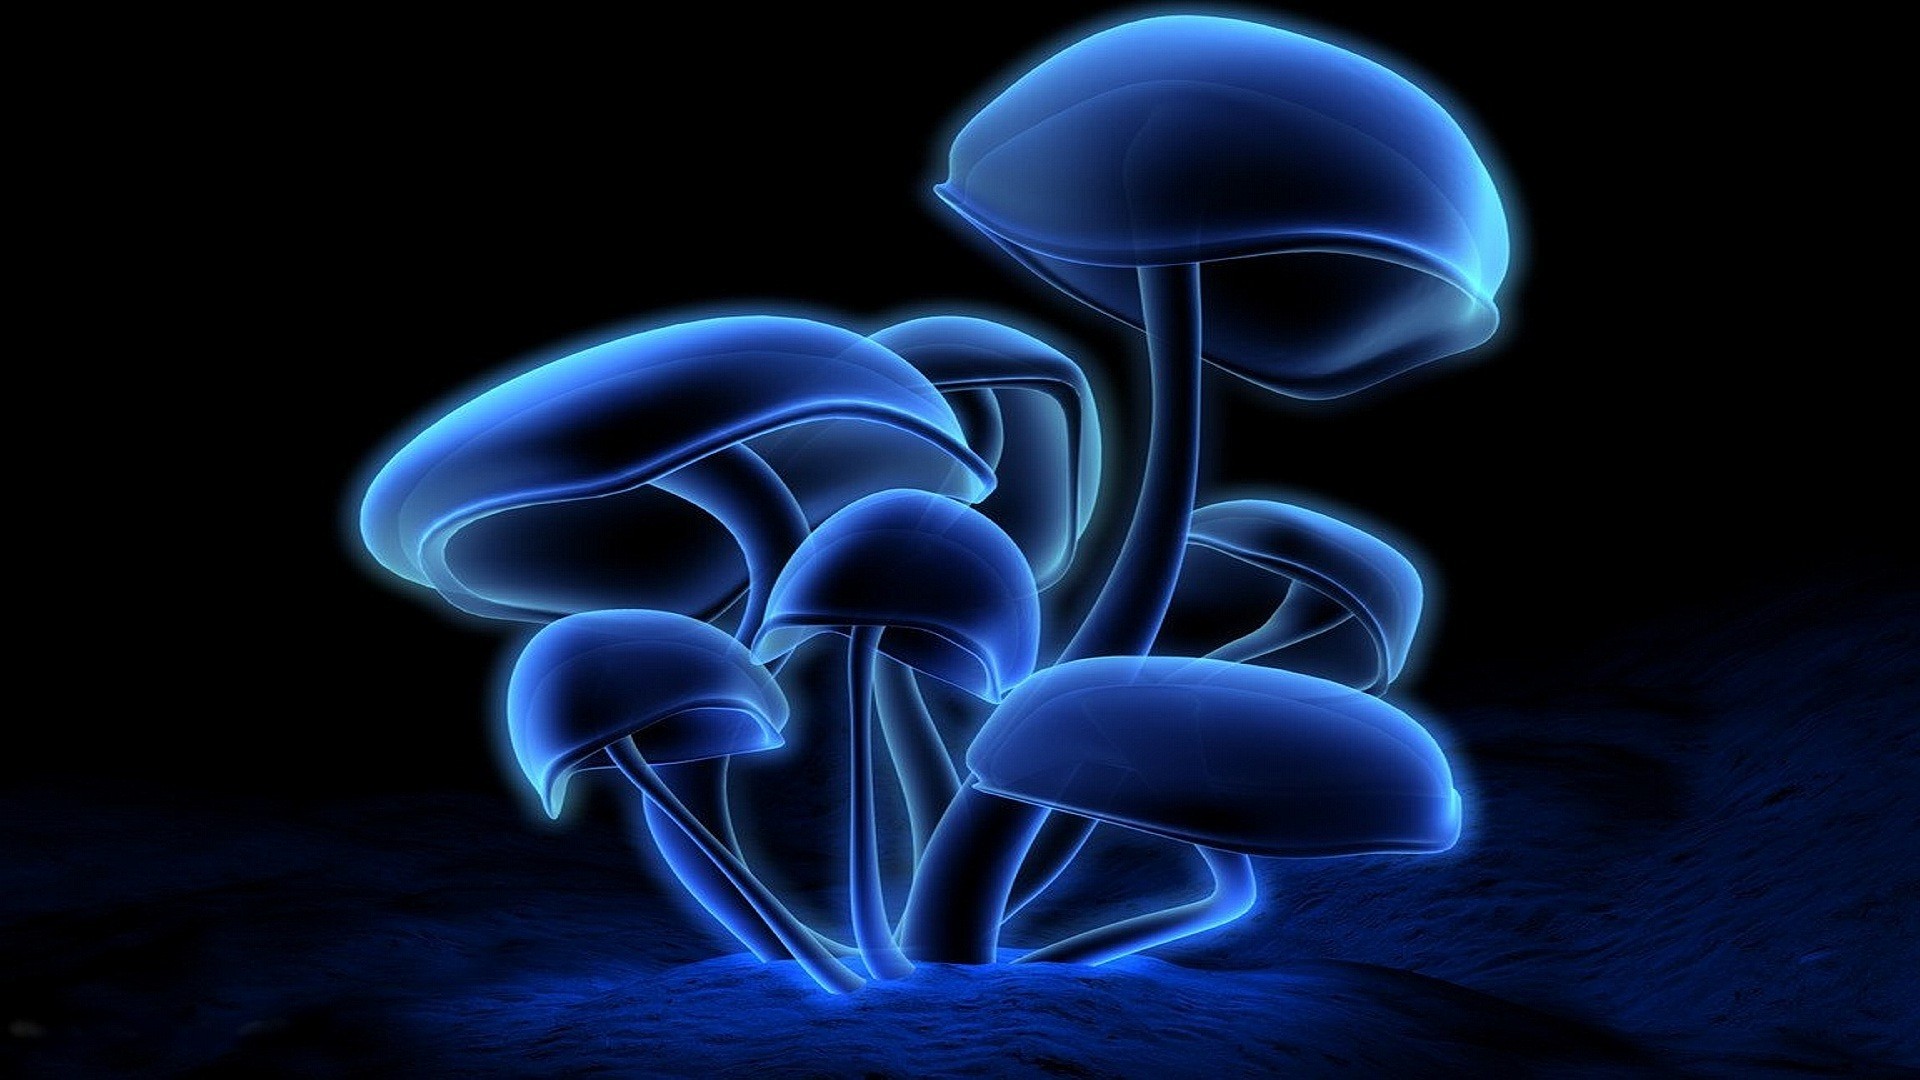 Neon glowing mushrooms wallpaper 12383